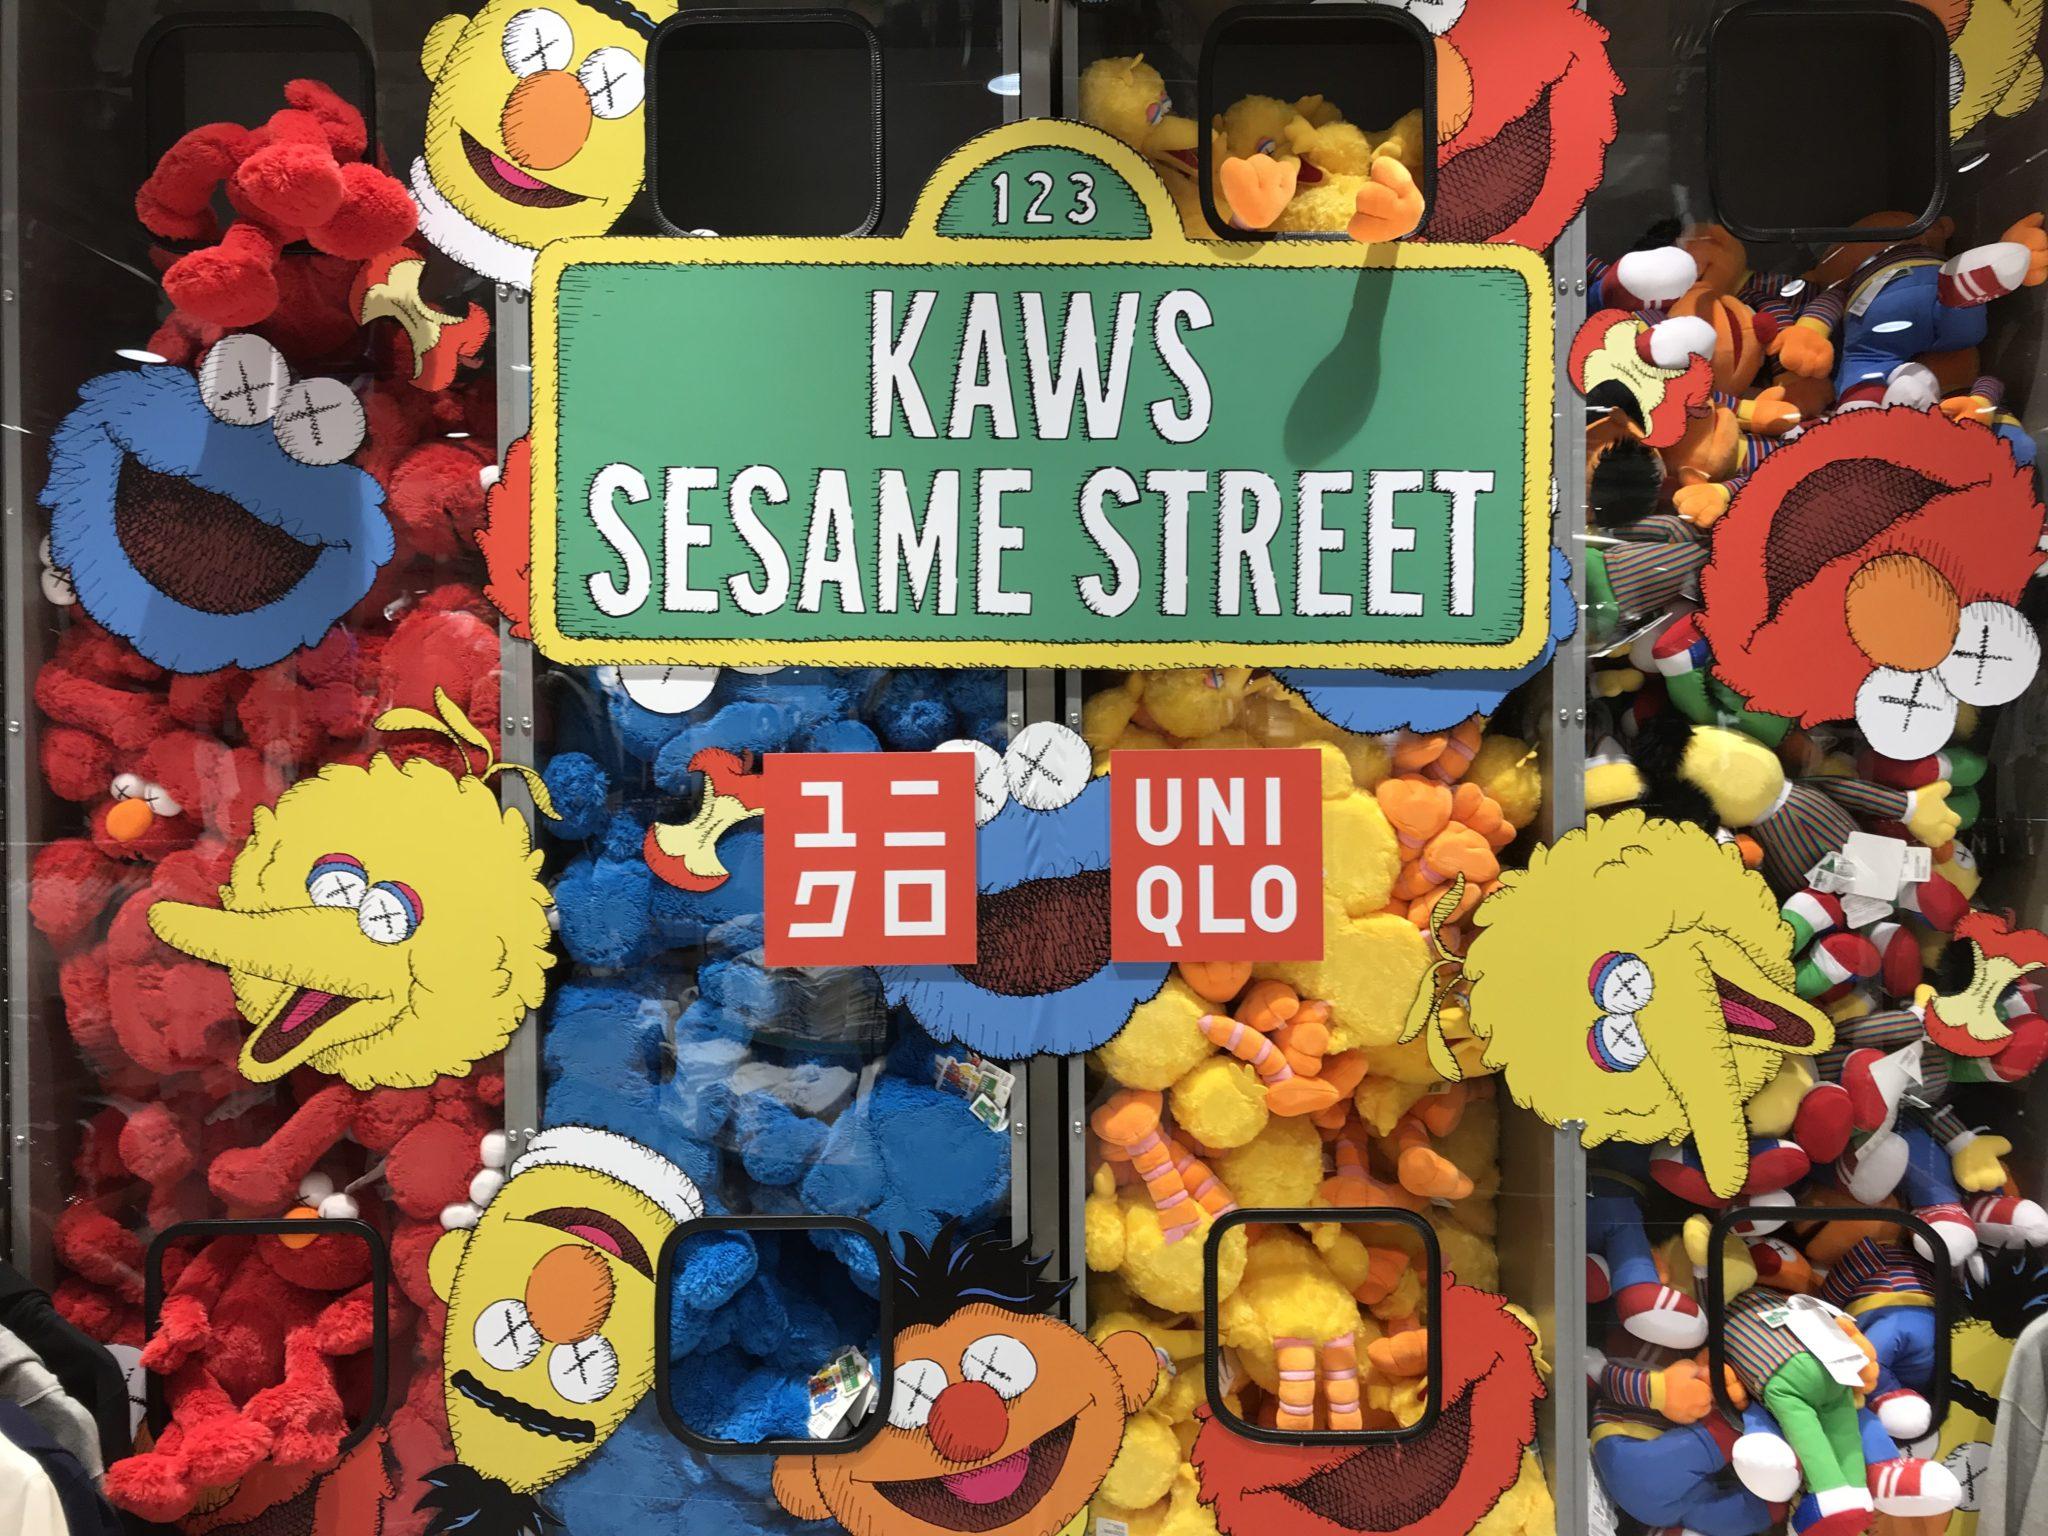 Sesame Street X KAWS X Uniqlo Collection